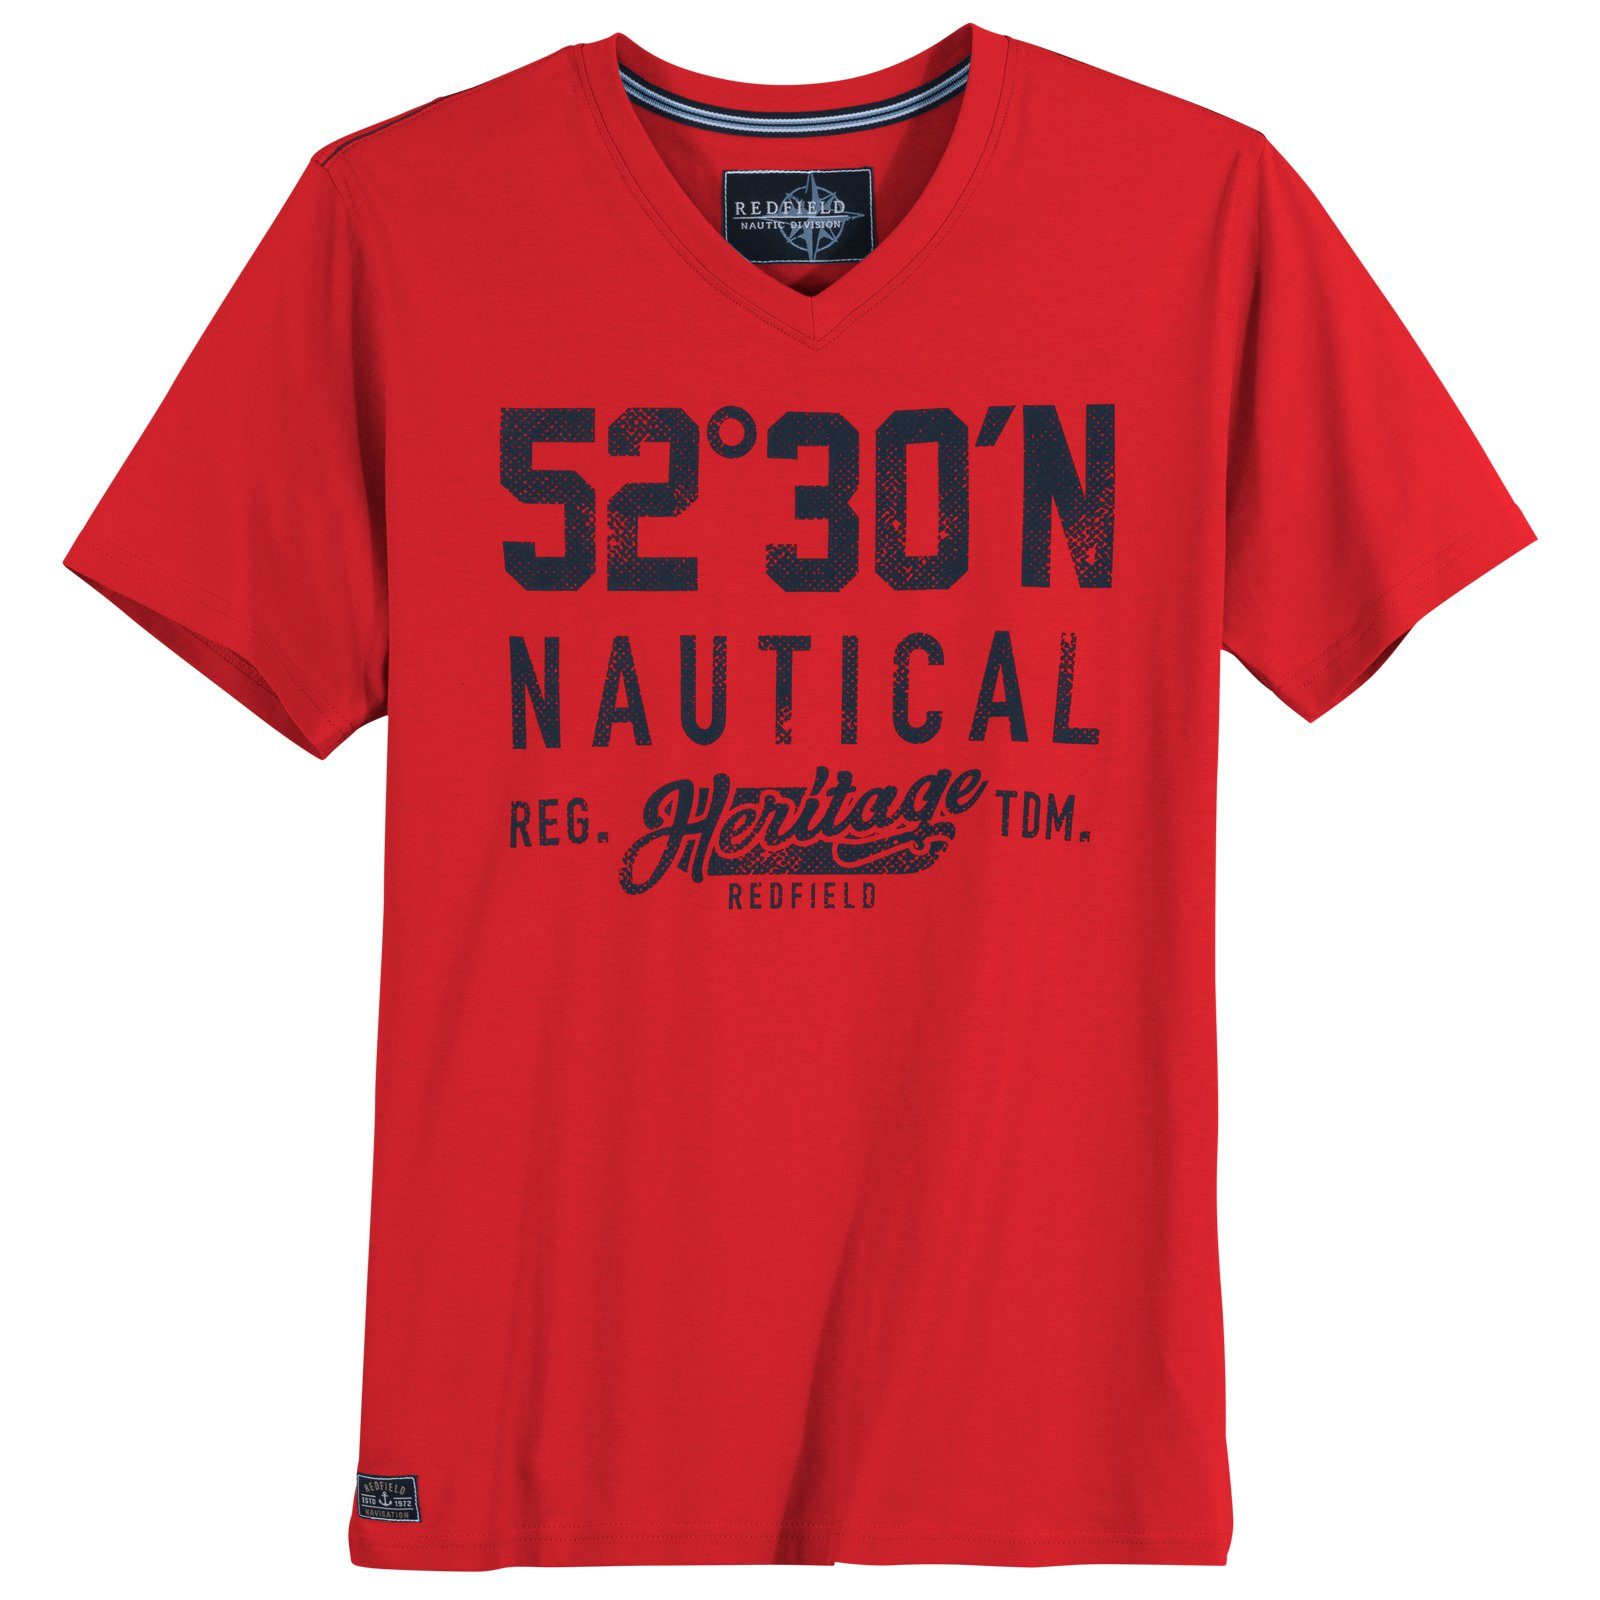 redfield Print-Shirt Große Größen Herren T-Shirt V-Neck 52°30'N rot Redfield